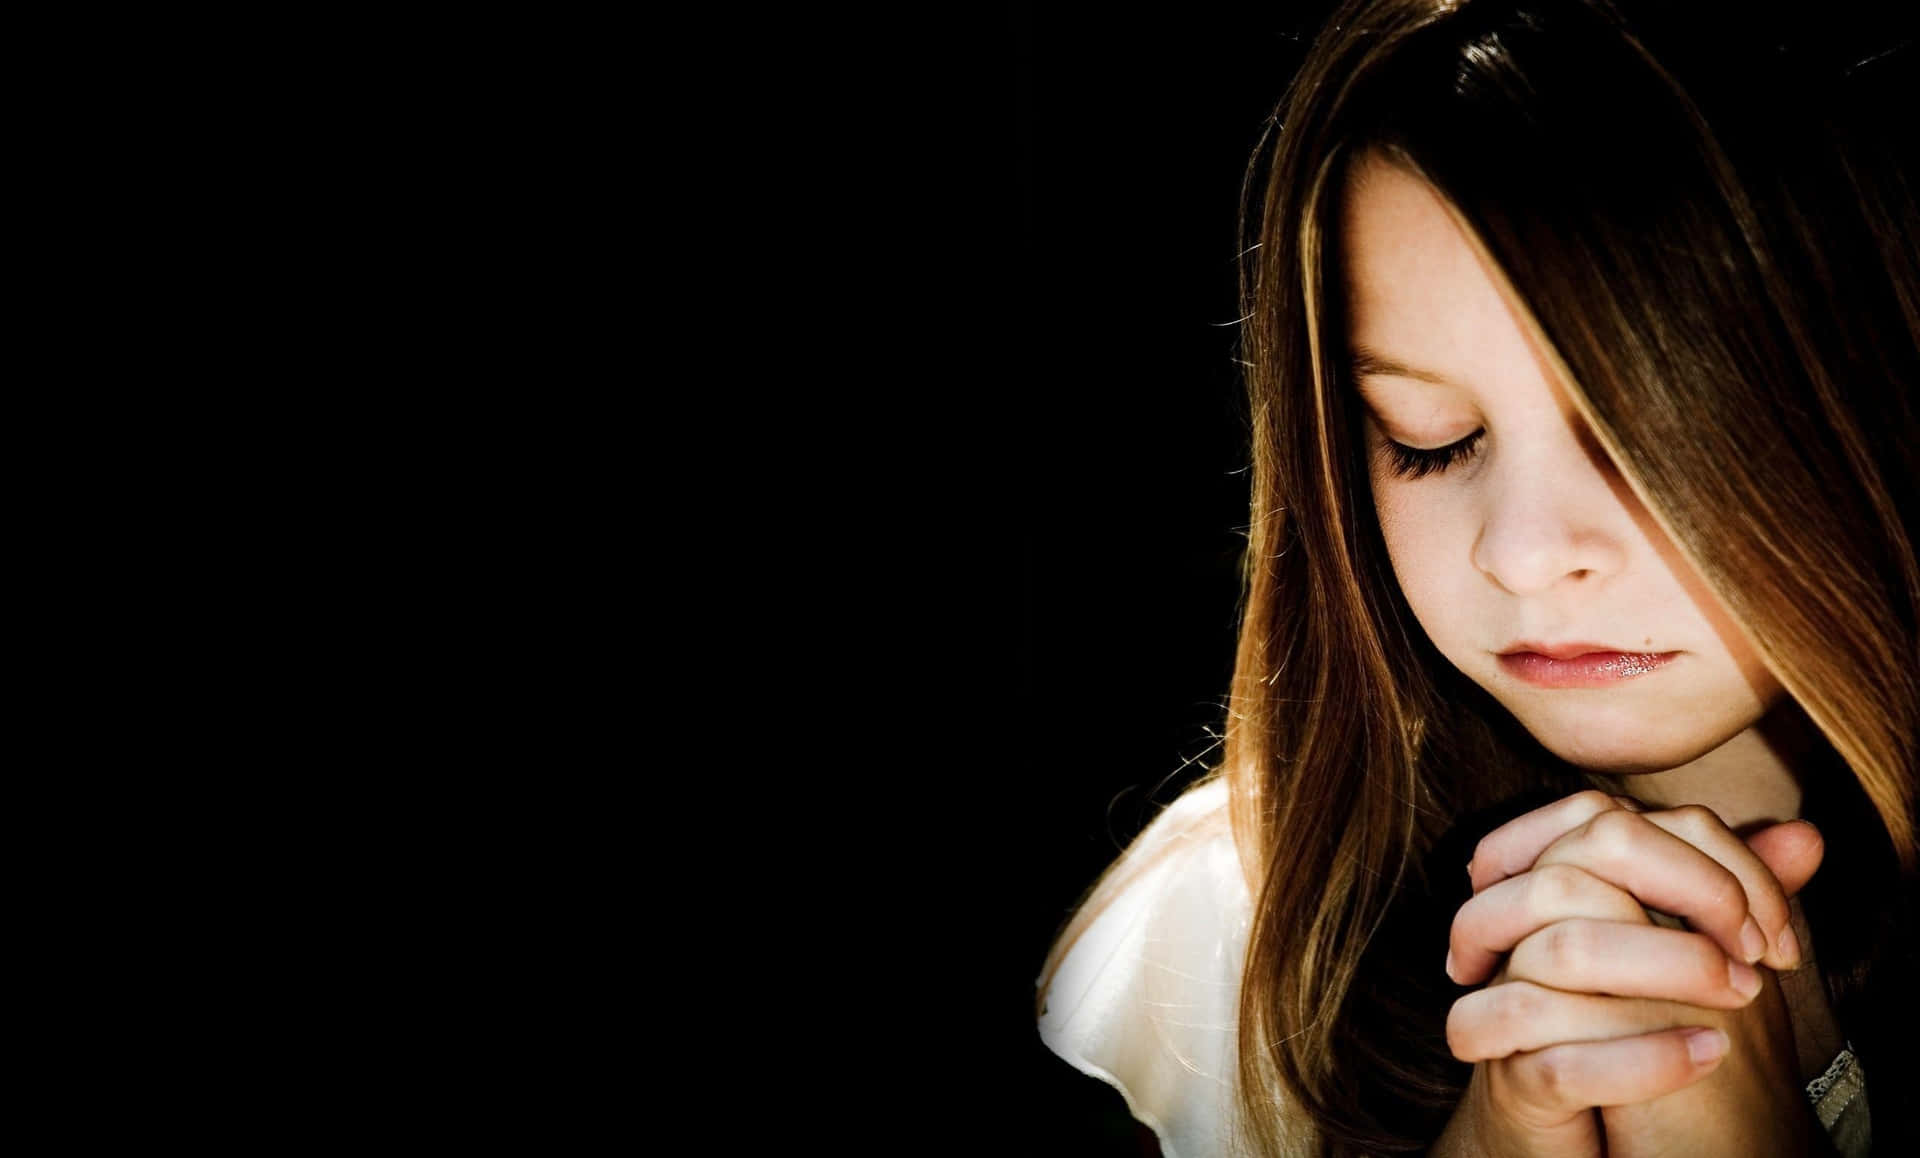 Praying with Faith&Hope